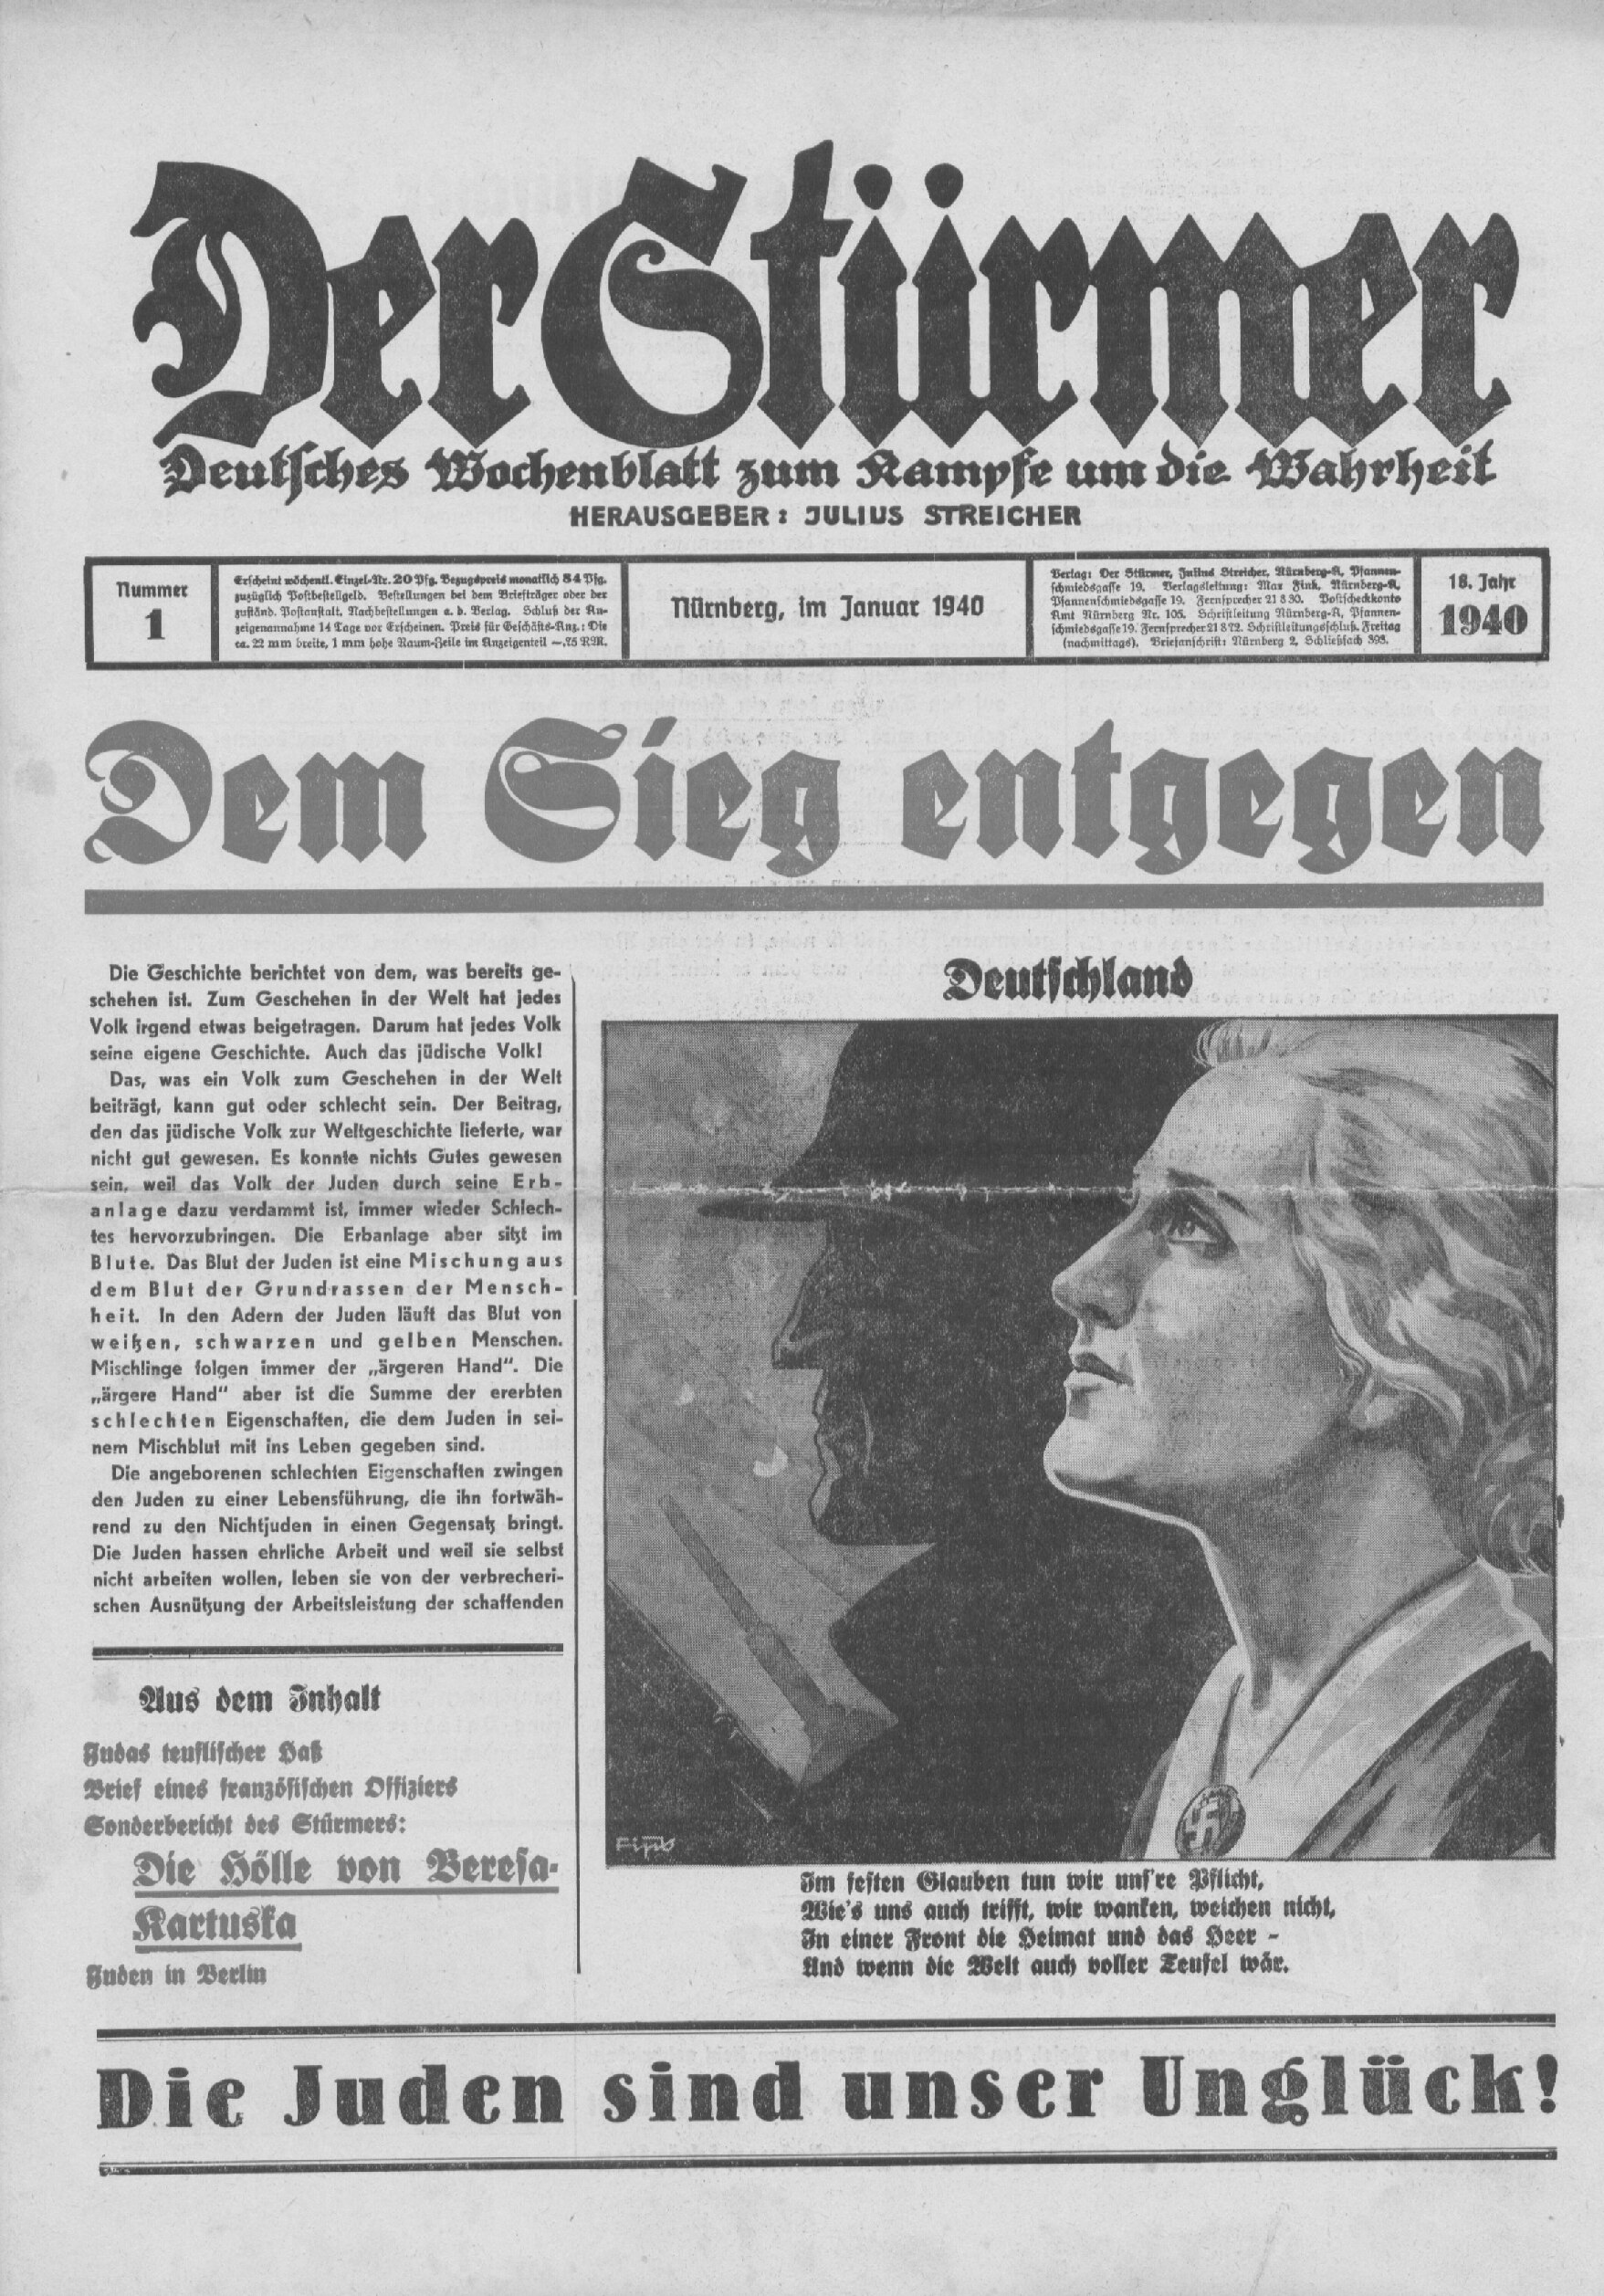 Der Stürmer - 1940 Nr. 01 - Dem Sieg entgegen